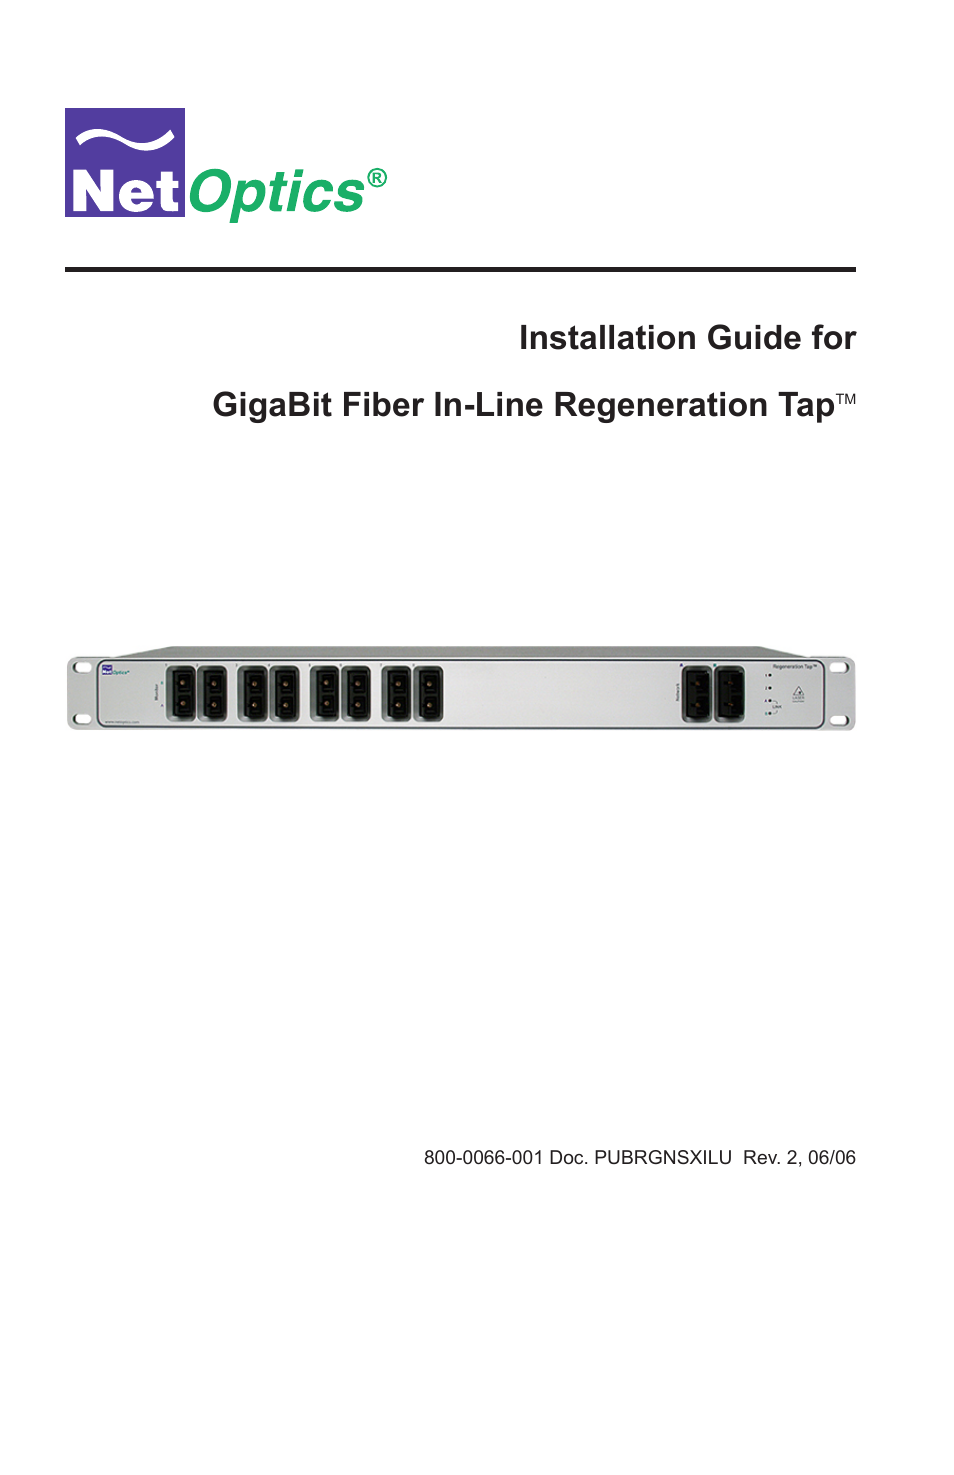 GigaBit Fiber In-Line Regeneration Tap